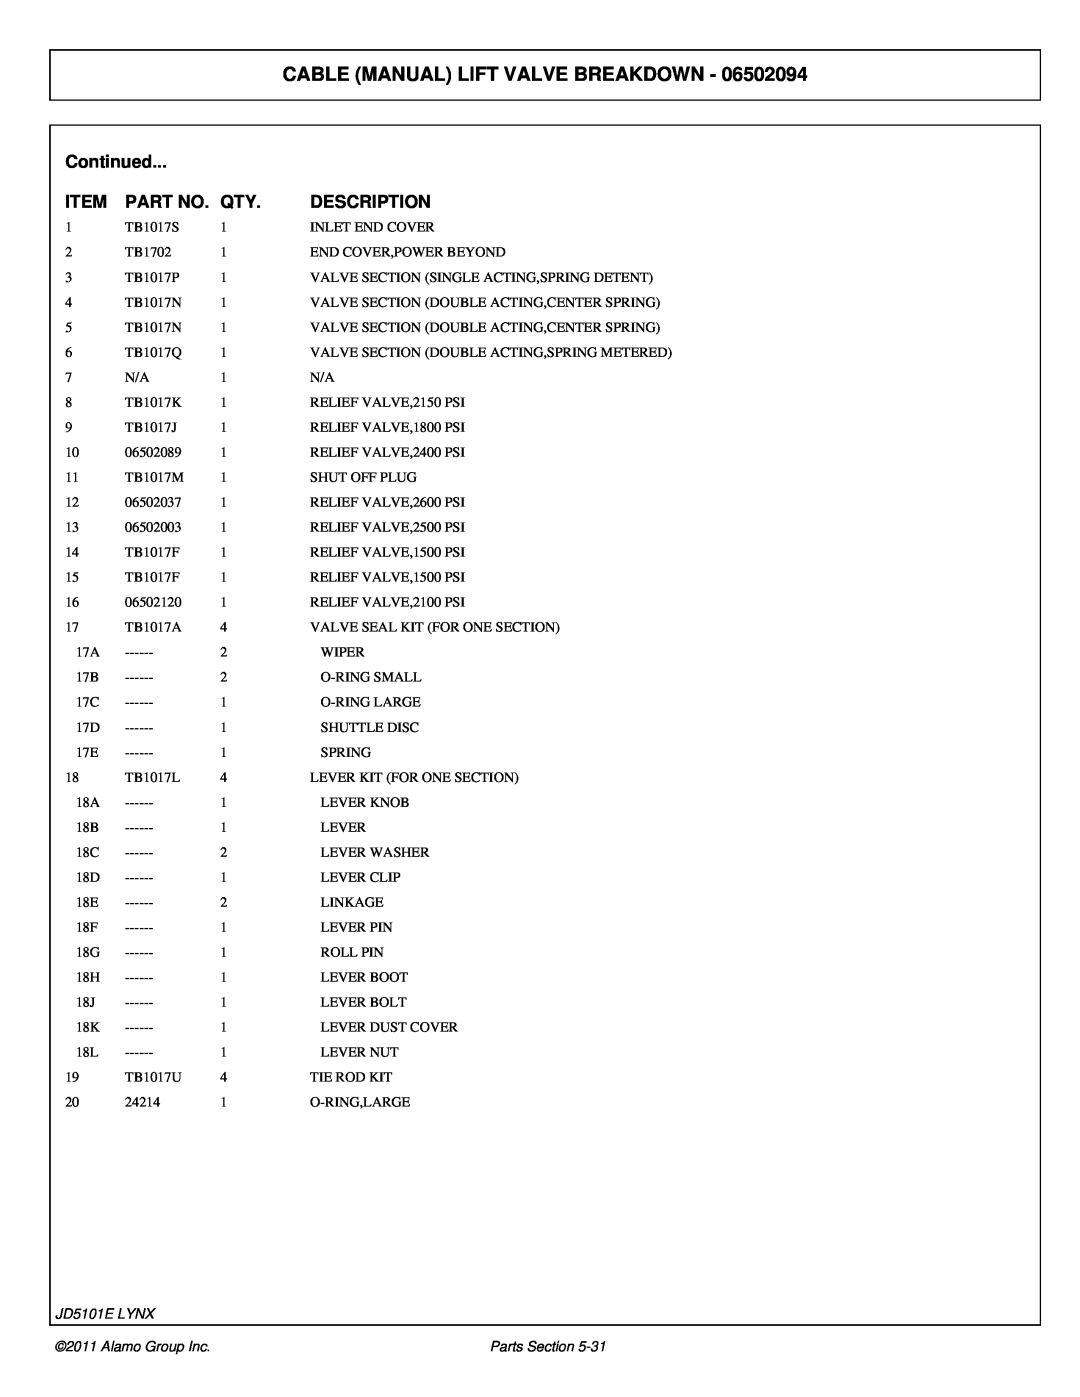 Tiger Products Co., Ltd 5083E Cable Manual Lift Valve Breakdown, Continued, Item, Part No. Qty, Description, JD5101E LYNX 